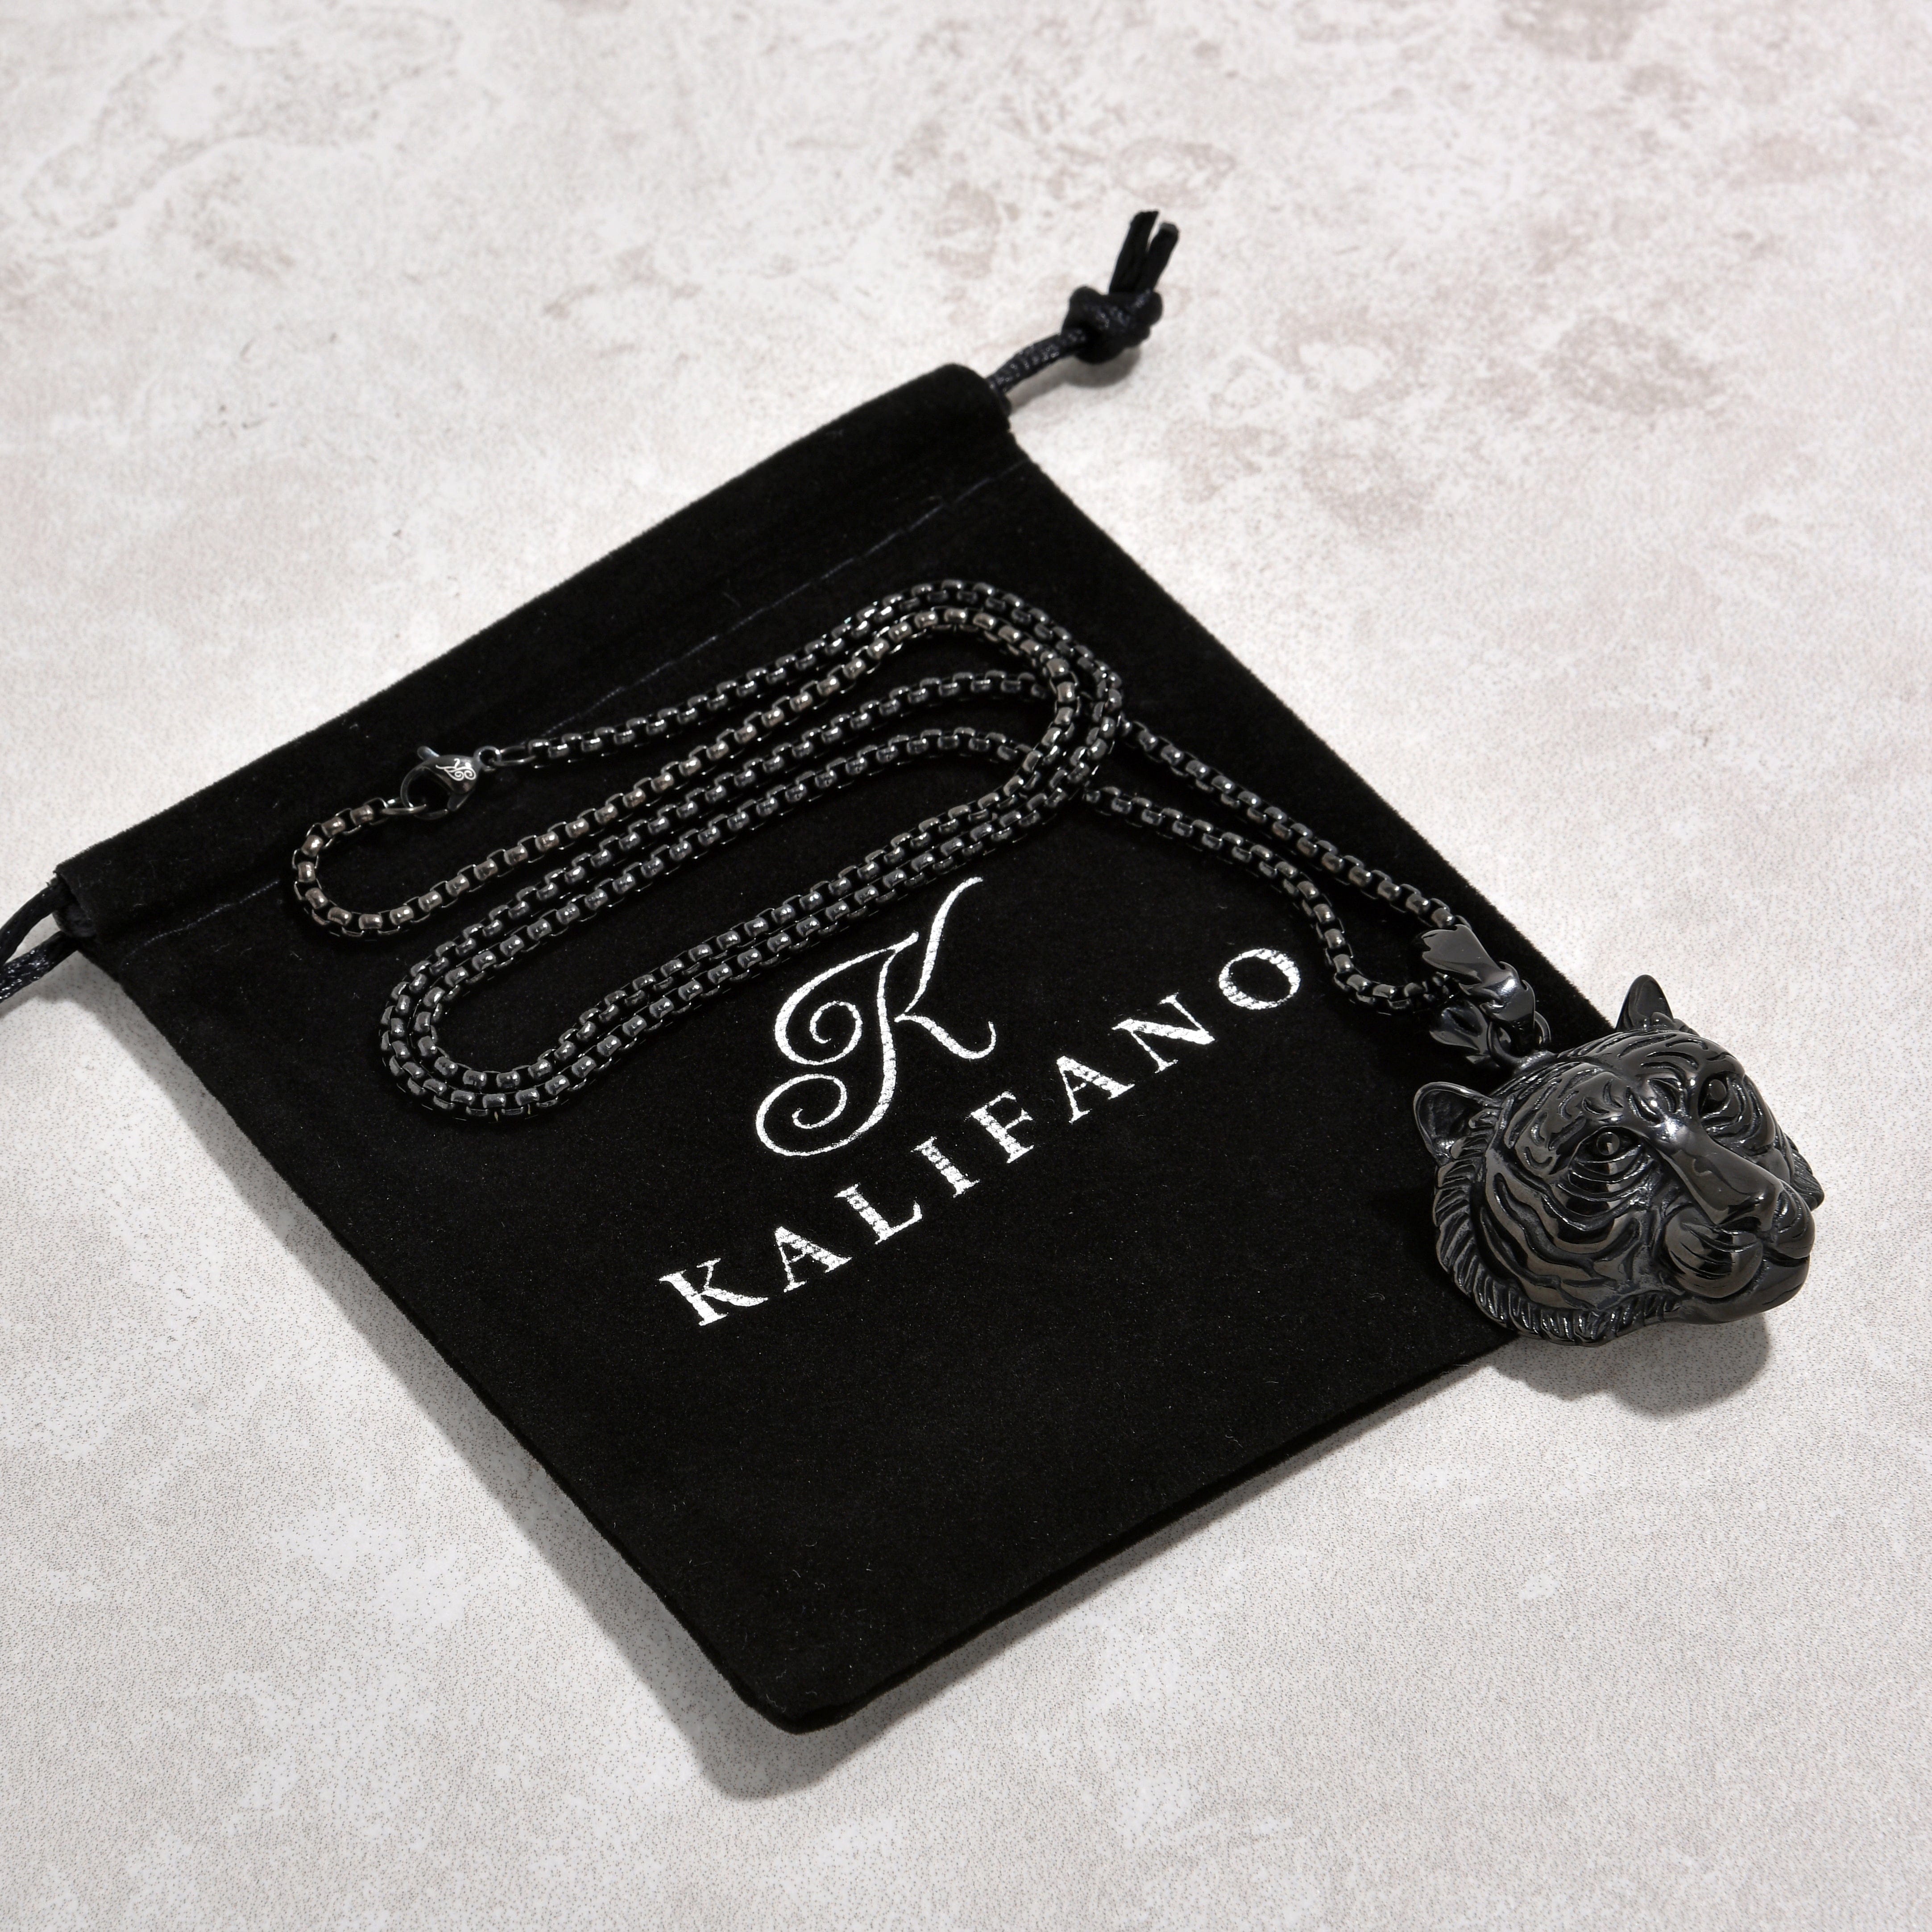 Kalifano Steel Hearts Jewelry Black Tiger Steel Hearts Necklace SHN521-B